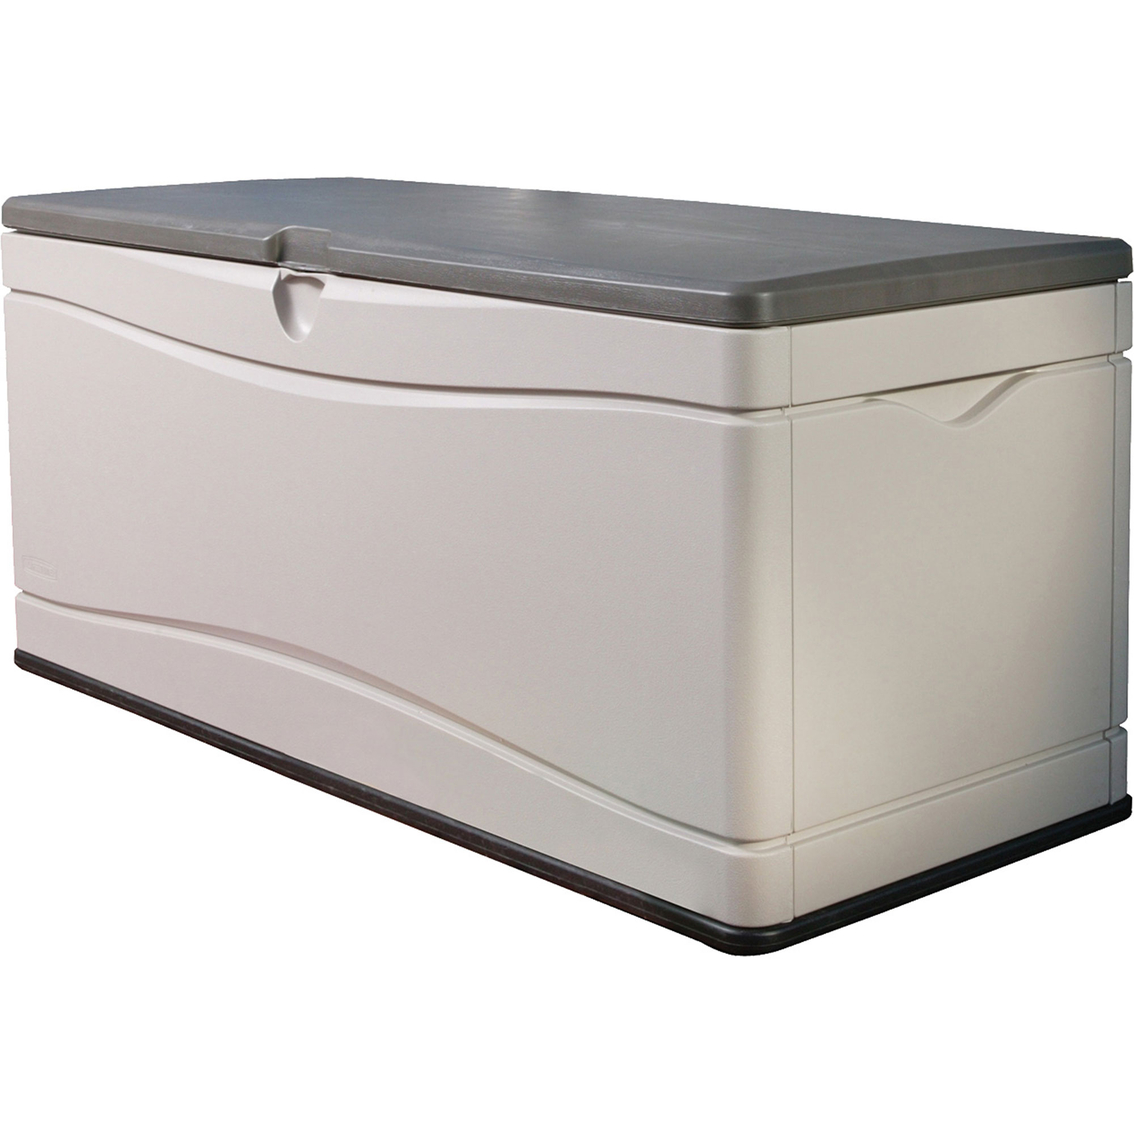 Lifetime 130g Heavy-duty Outdoor Storage Box, Deck Boxes